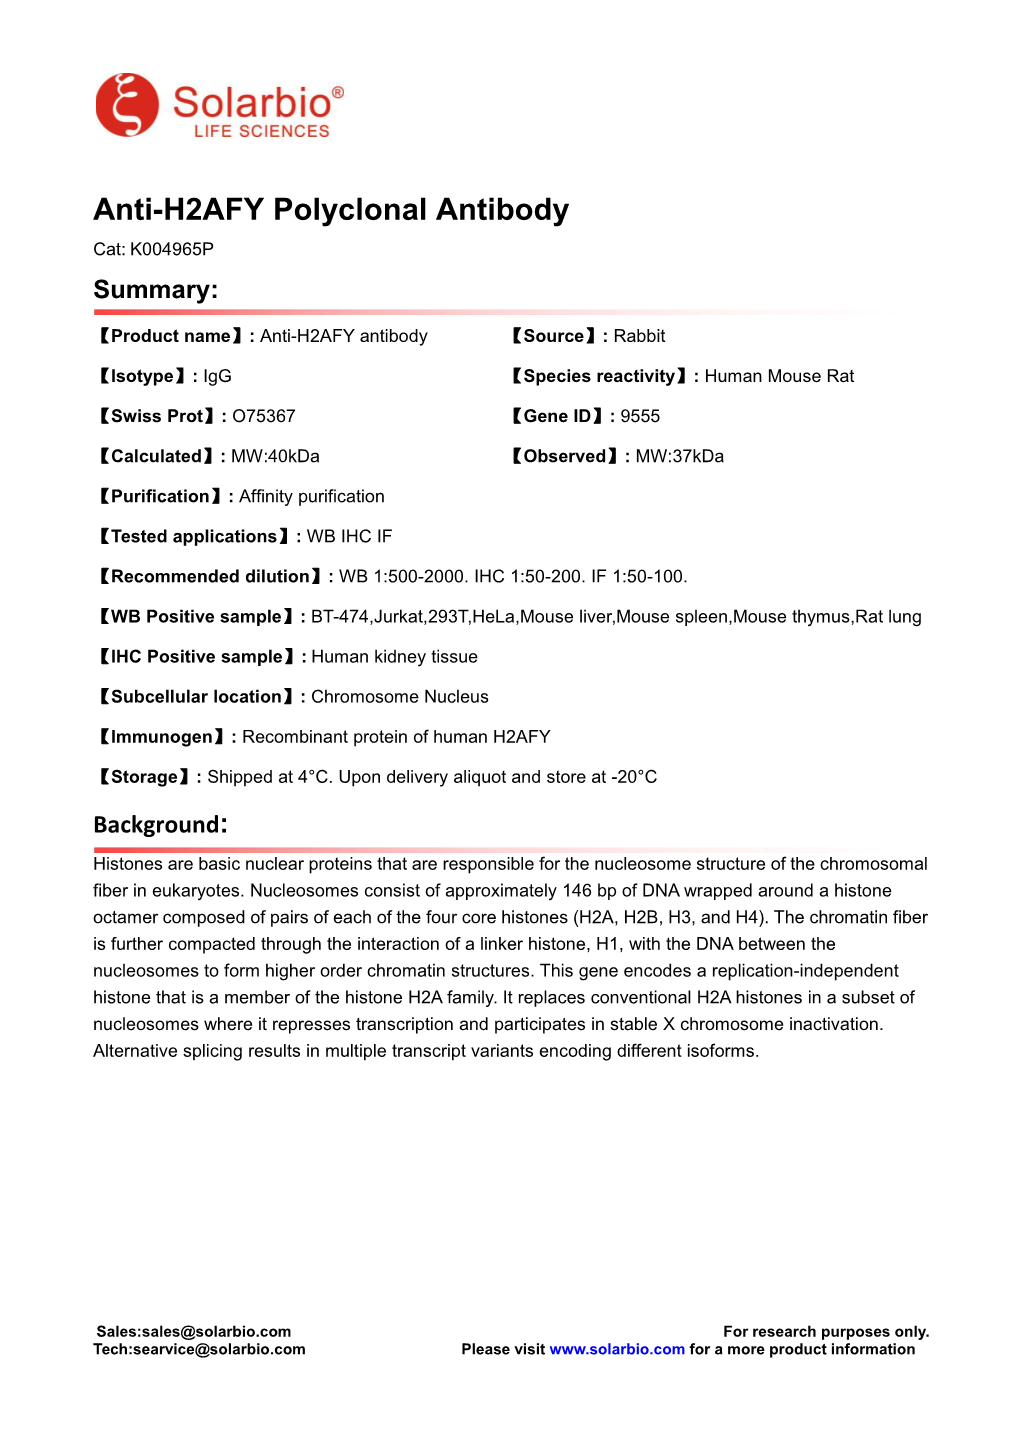 Anti-H2AFY Polyclonal Antibody Cat: K004965P Summary